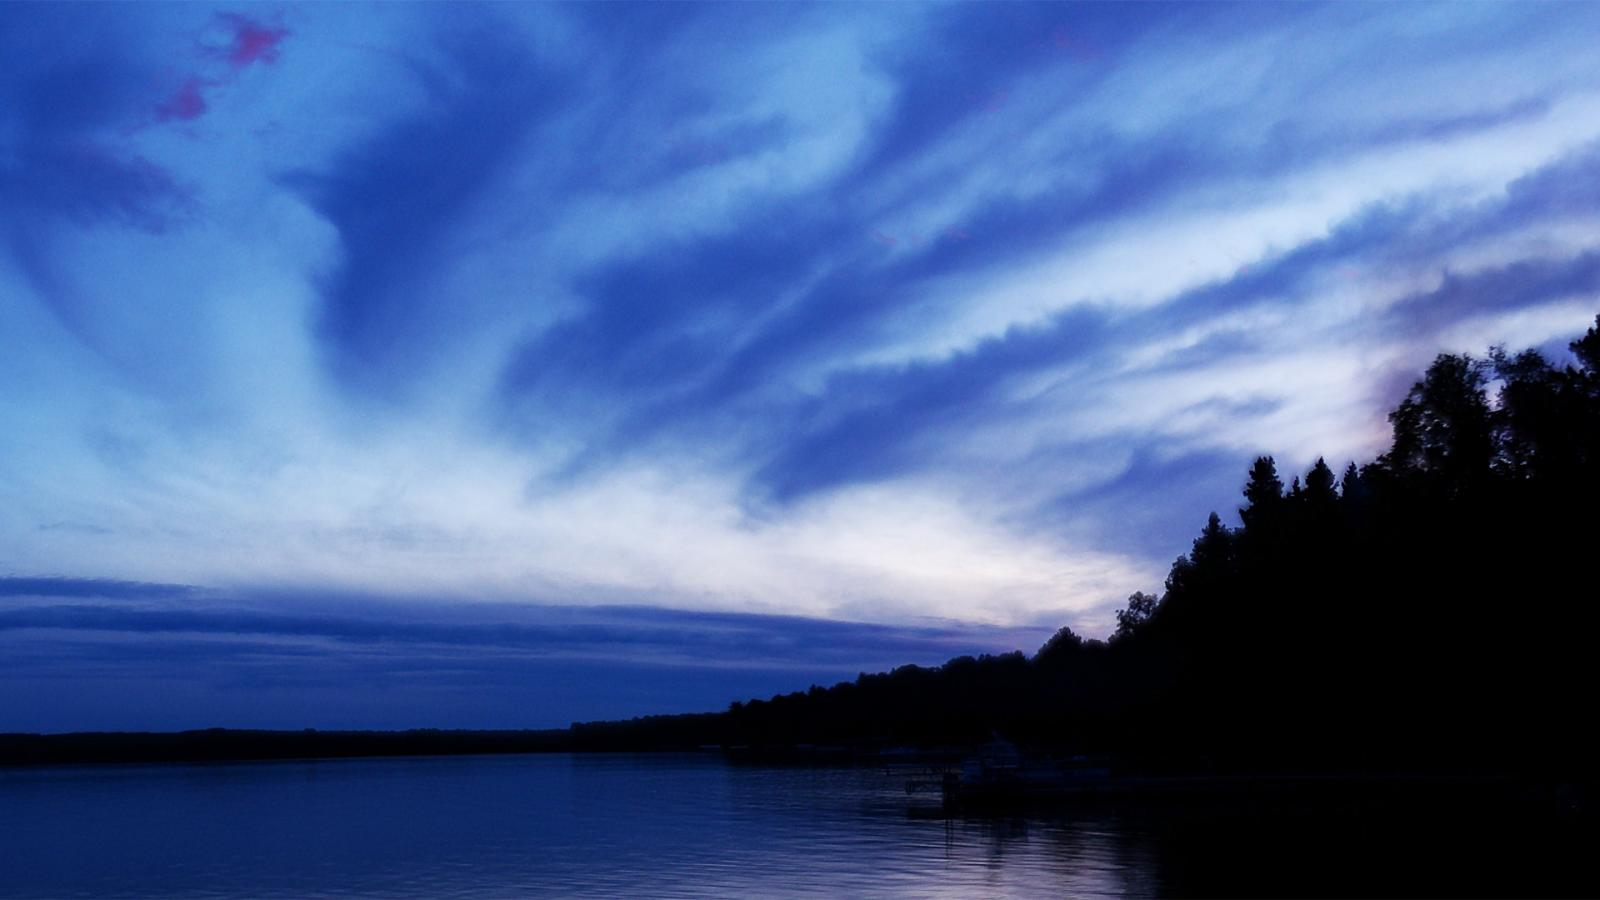 dual screen wallpaper 1920x1080,sky,blue,nature,water,cloud